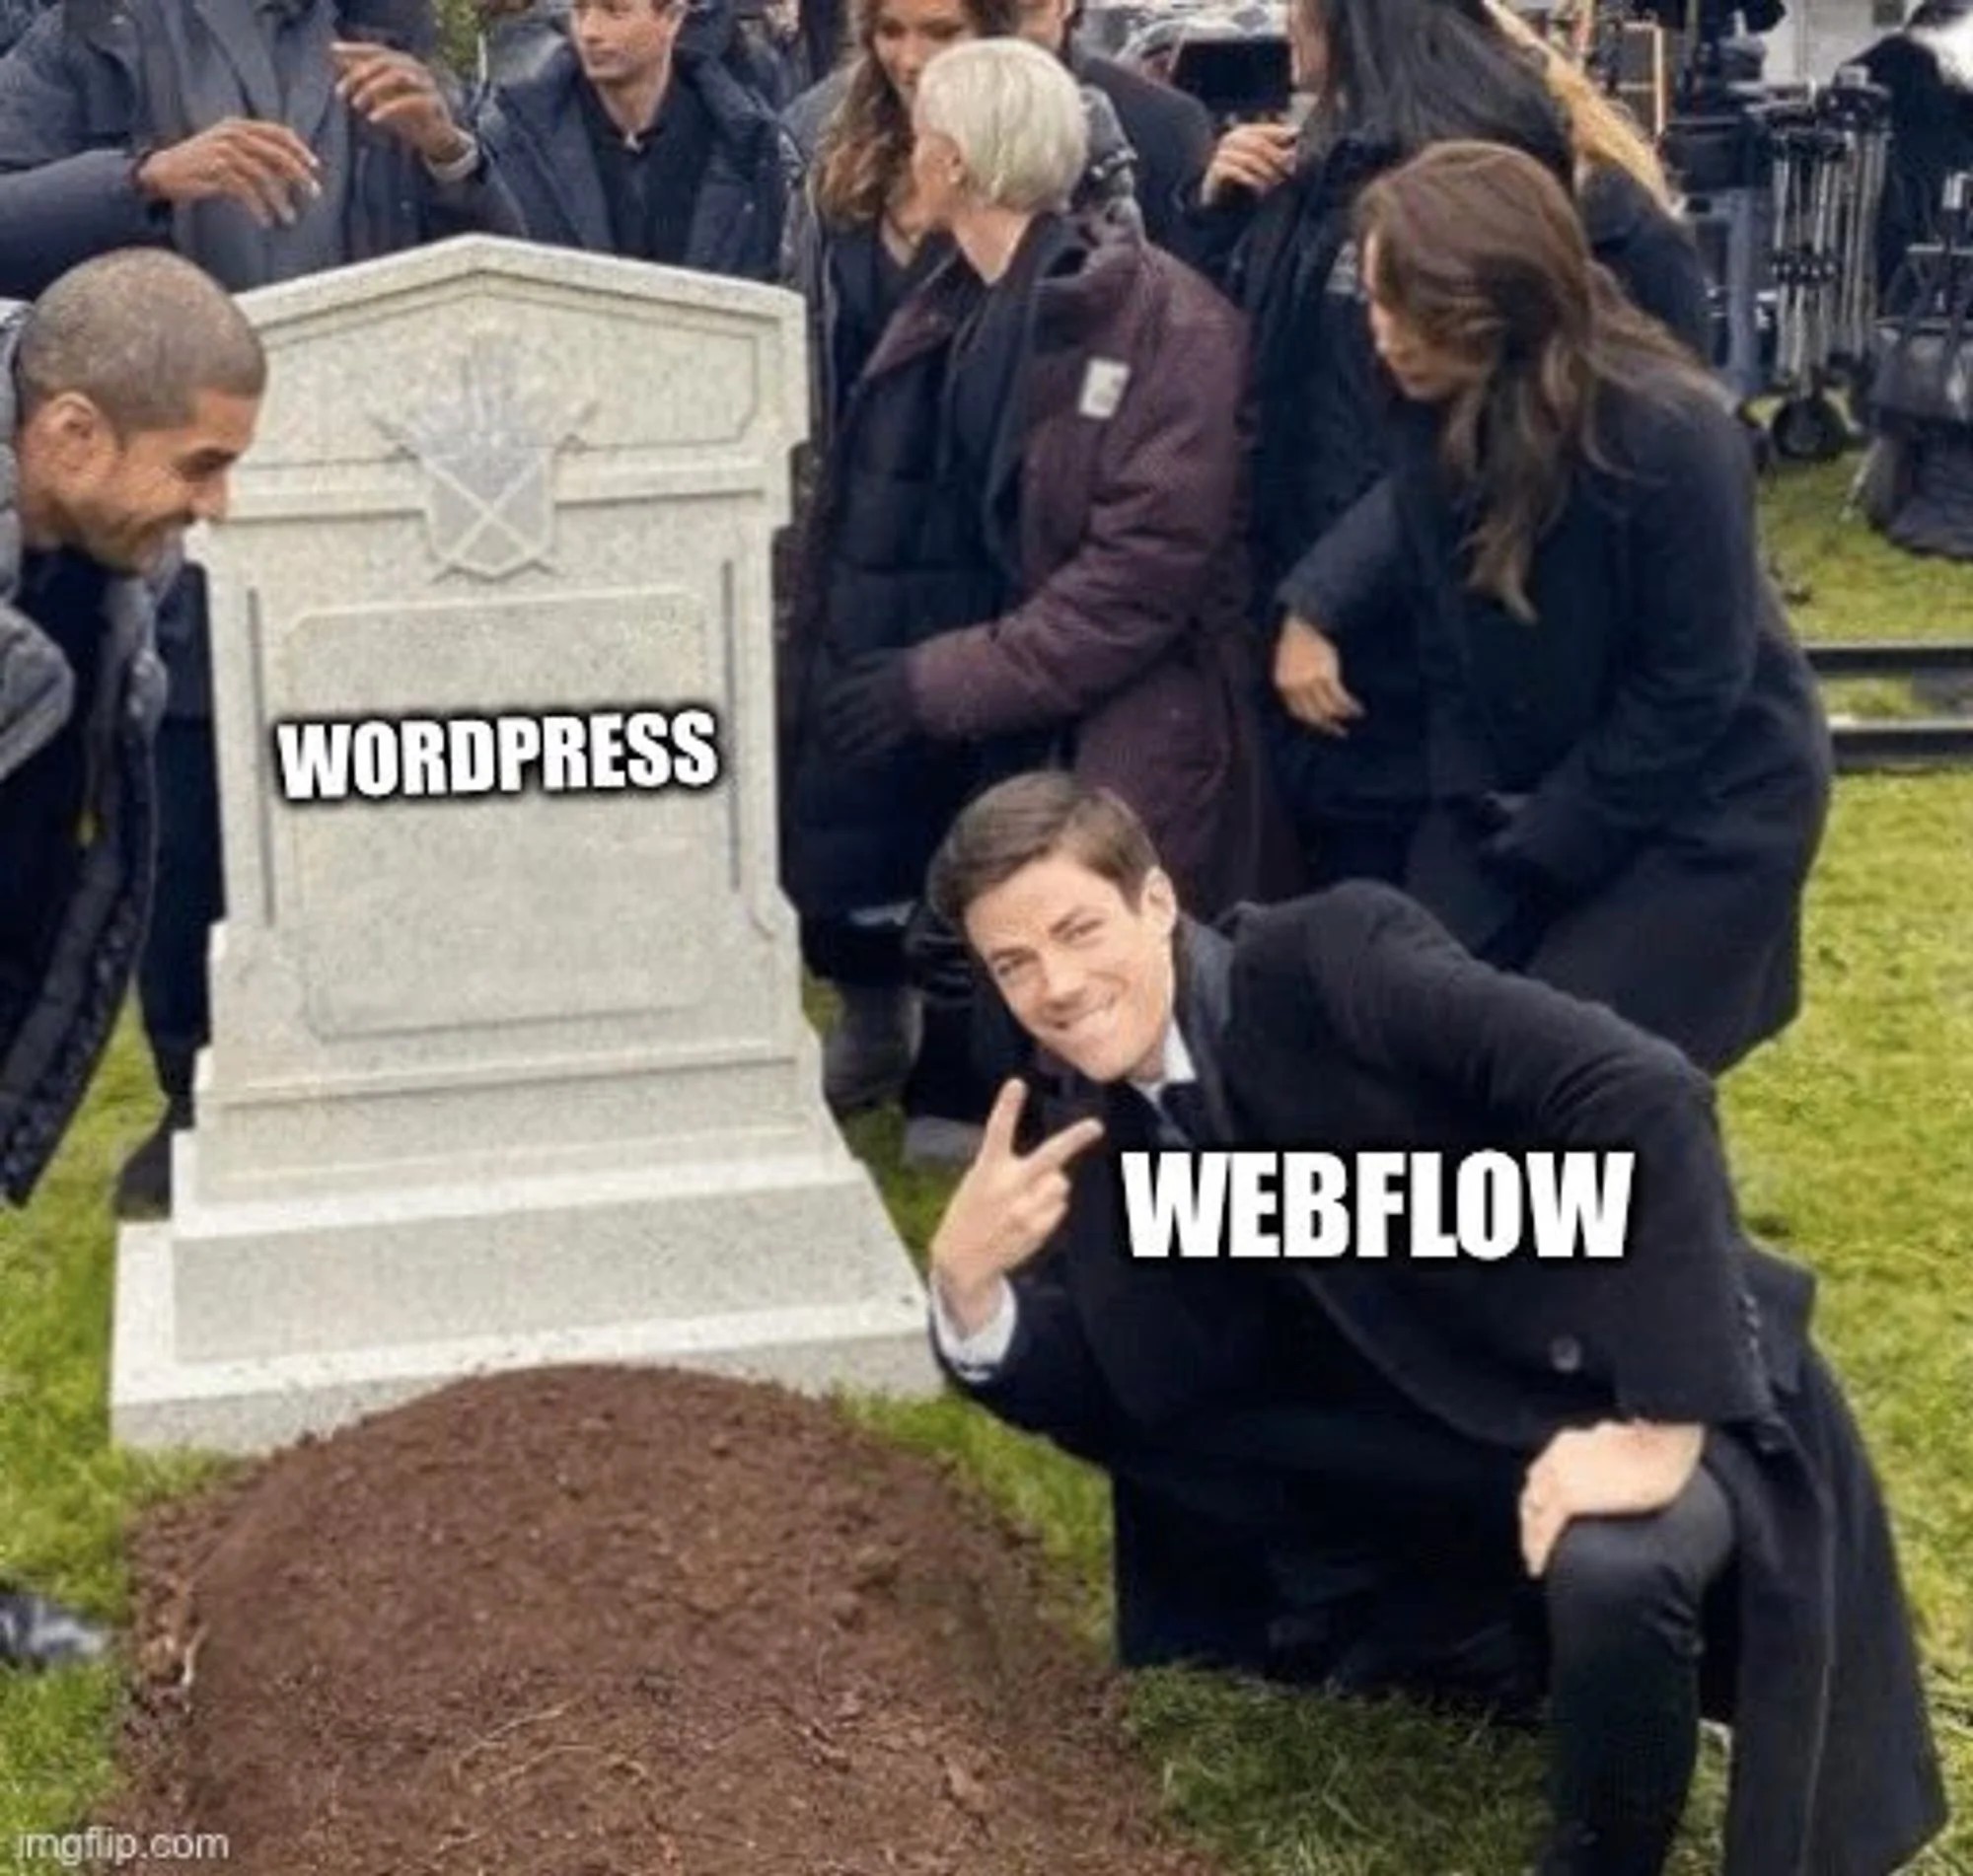 Wordpress VS Webflow, and the loser is Wordpress.